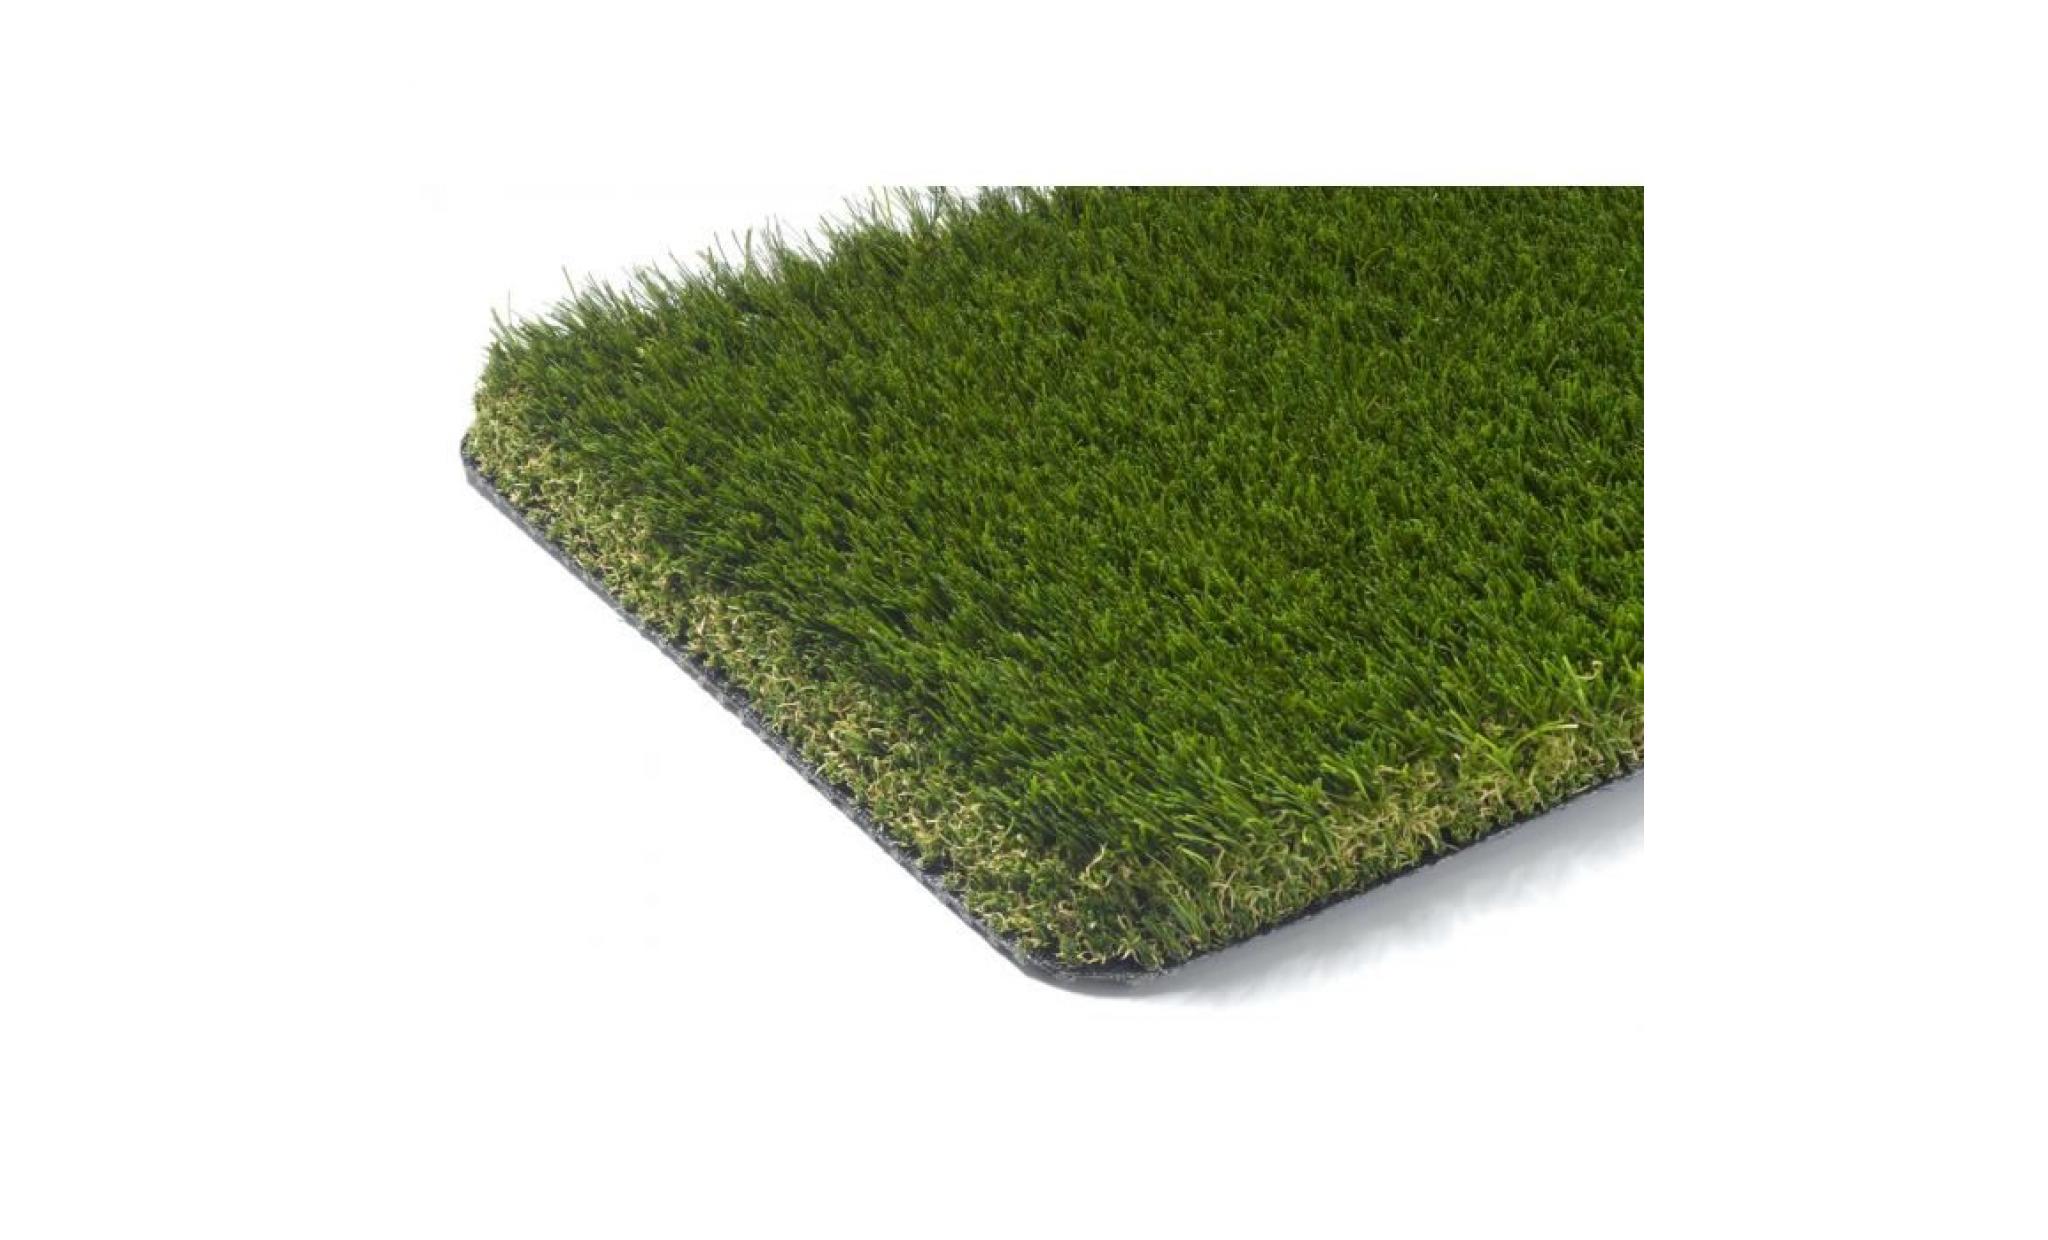 buckingham   tapis type luxe gazon artificiel – pour jardin, terrasse, balcon   vert  [200x150 cm]